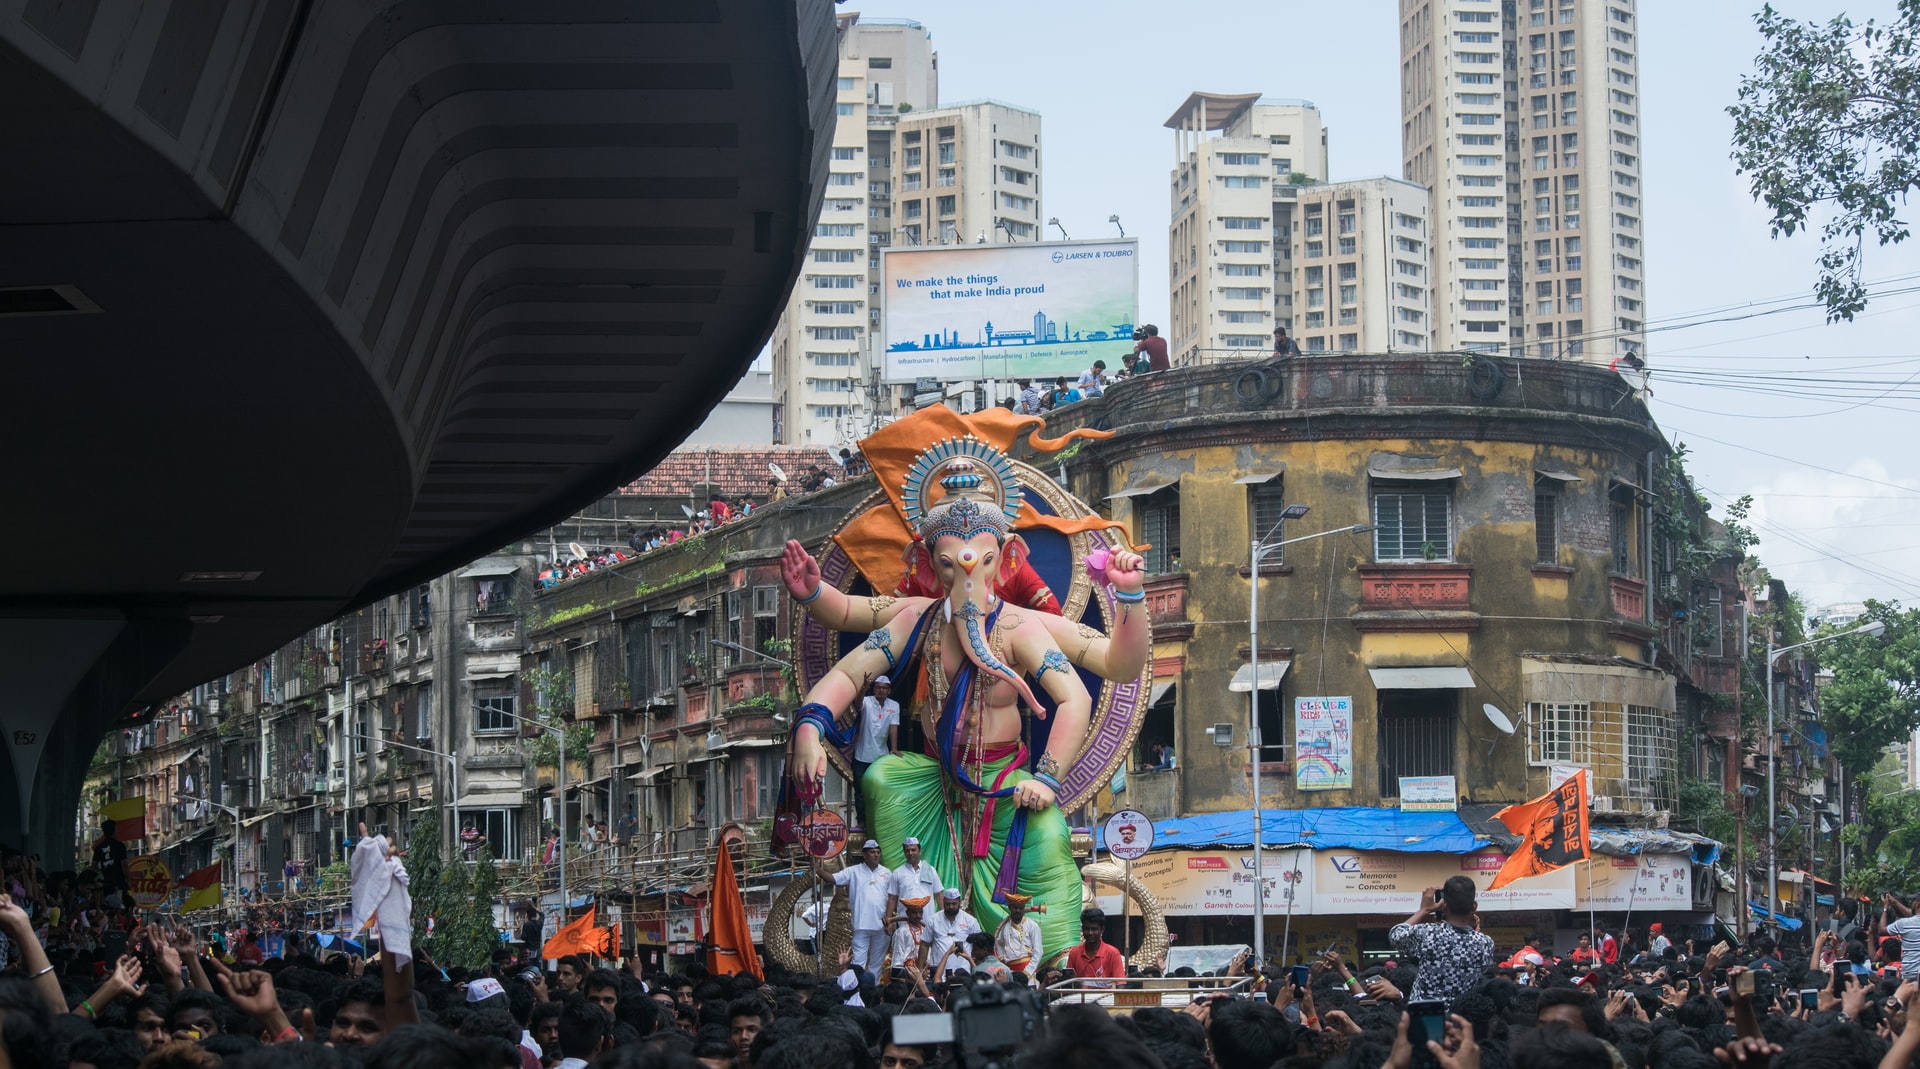 Crowd at Mumbai Festival